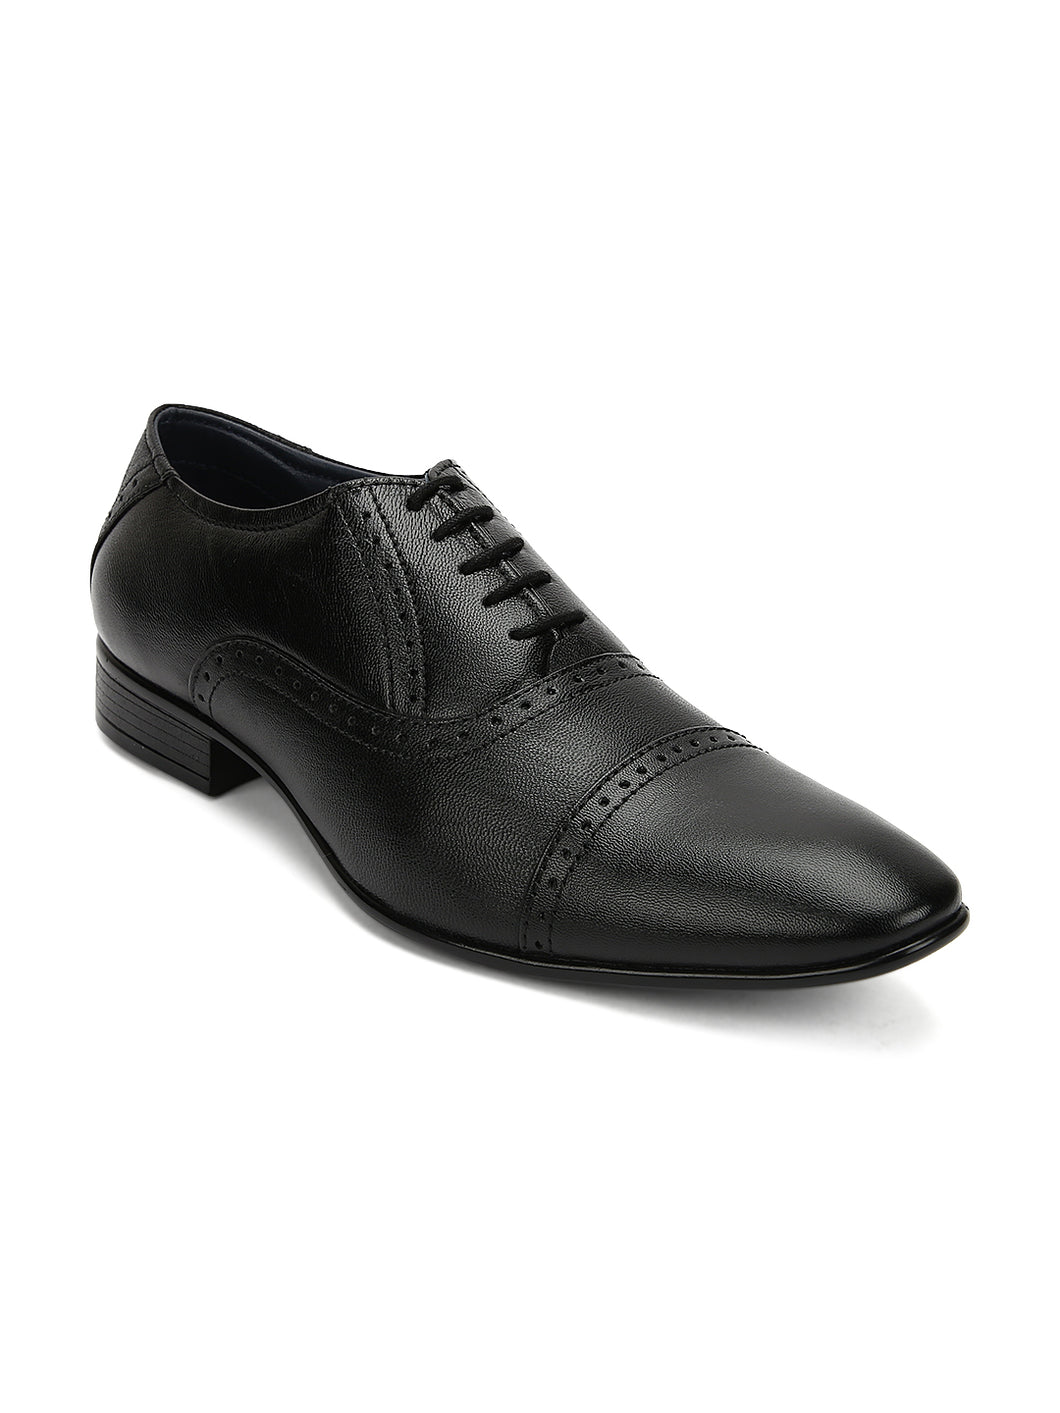 Teakwood Men Genuine Leather Formal Oxford Shoes